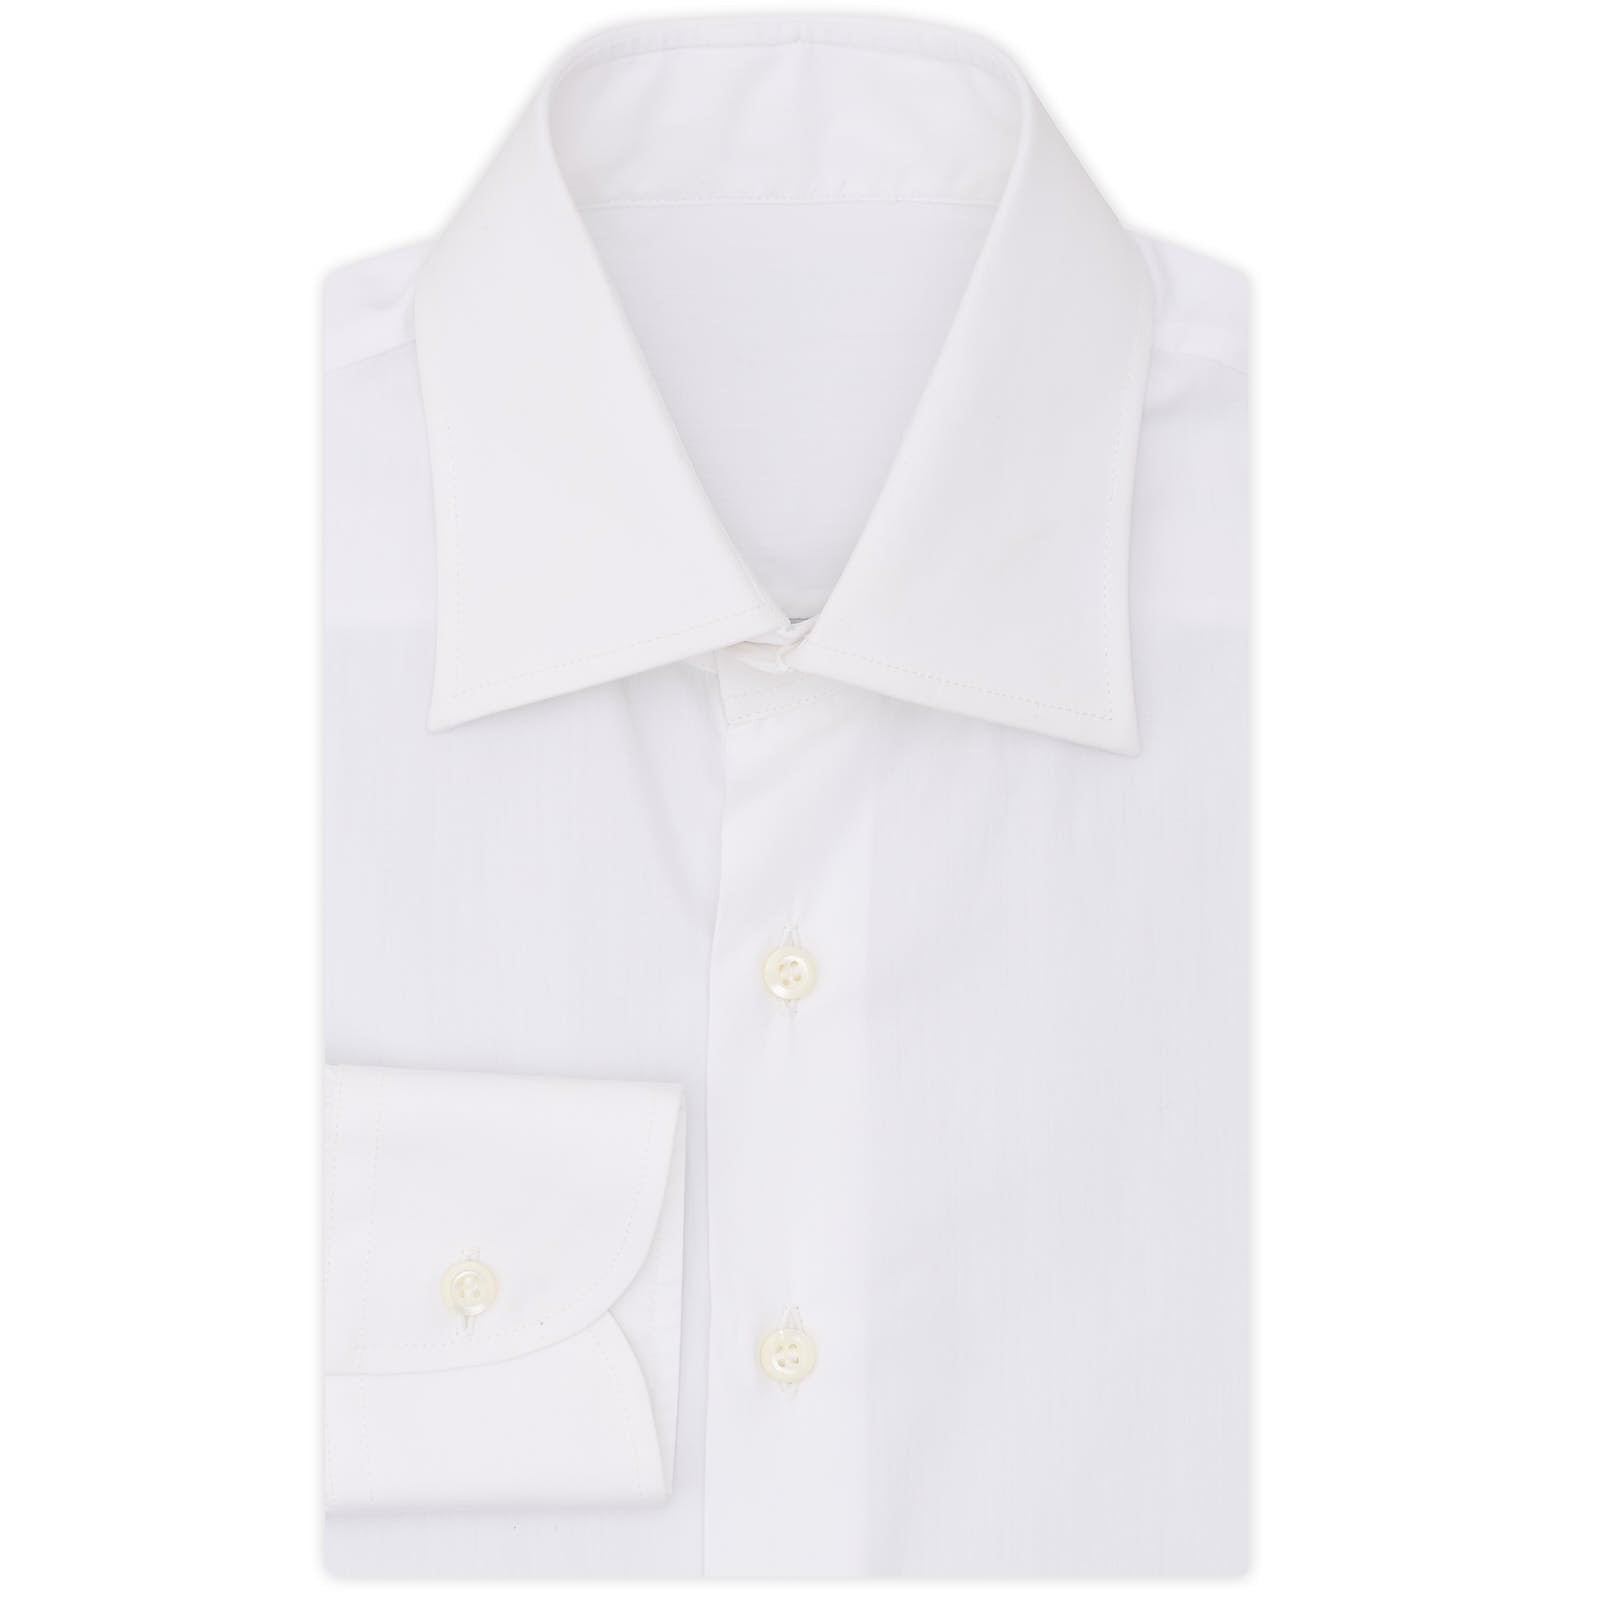 BESPOKE ATHENS Handmade White Cotton Poplin Dress Shirt EU 40 NEW US 15.75